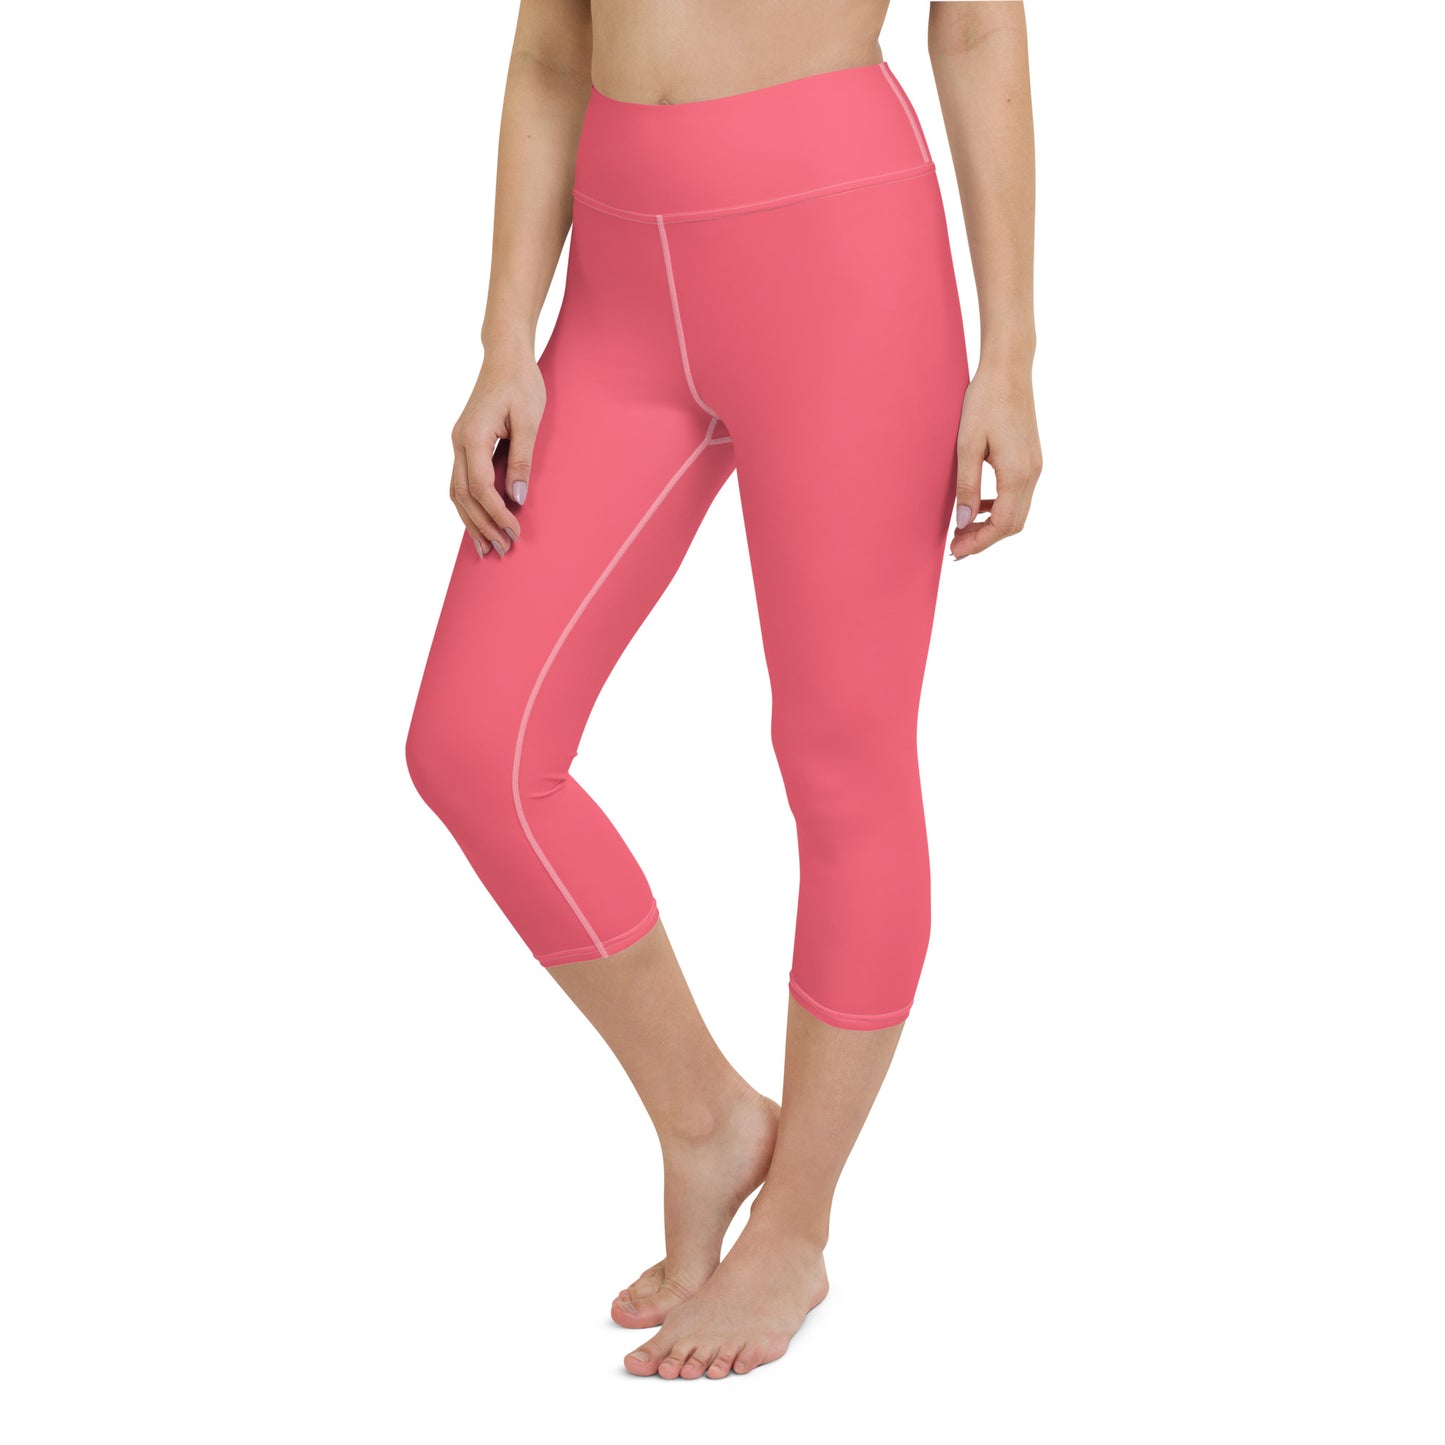 Cueva Solid Color Capri High Waist Yoga Leggings / Pants with Inside Pocket